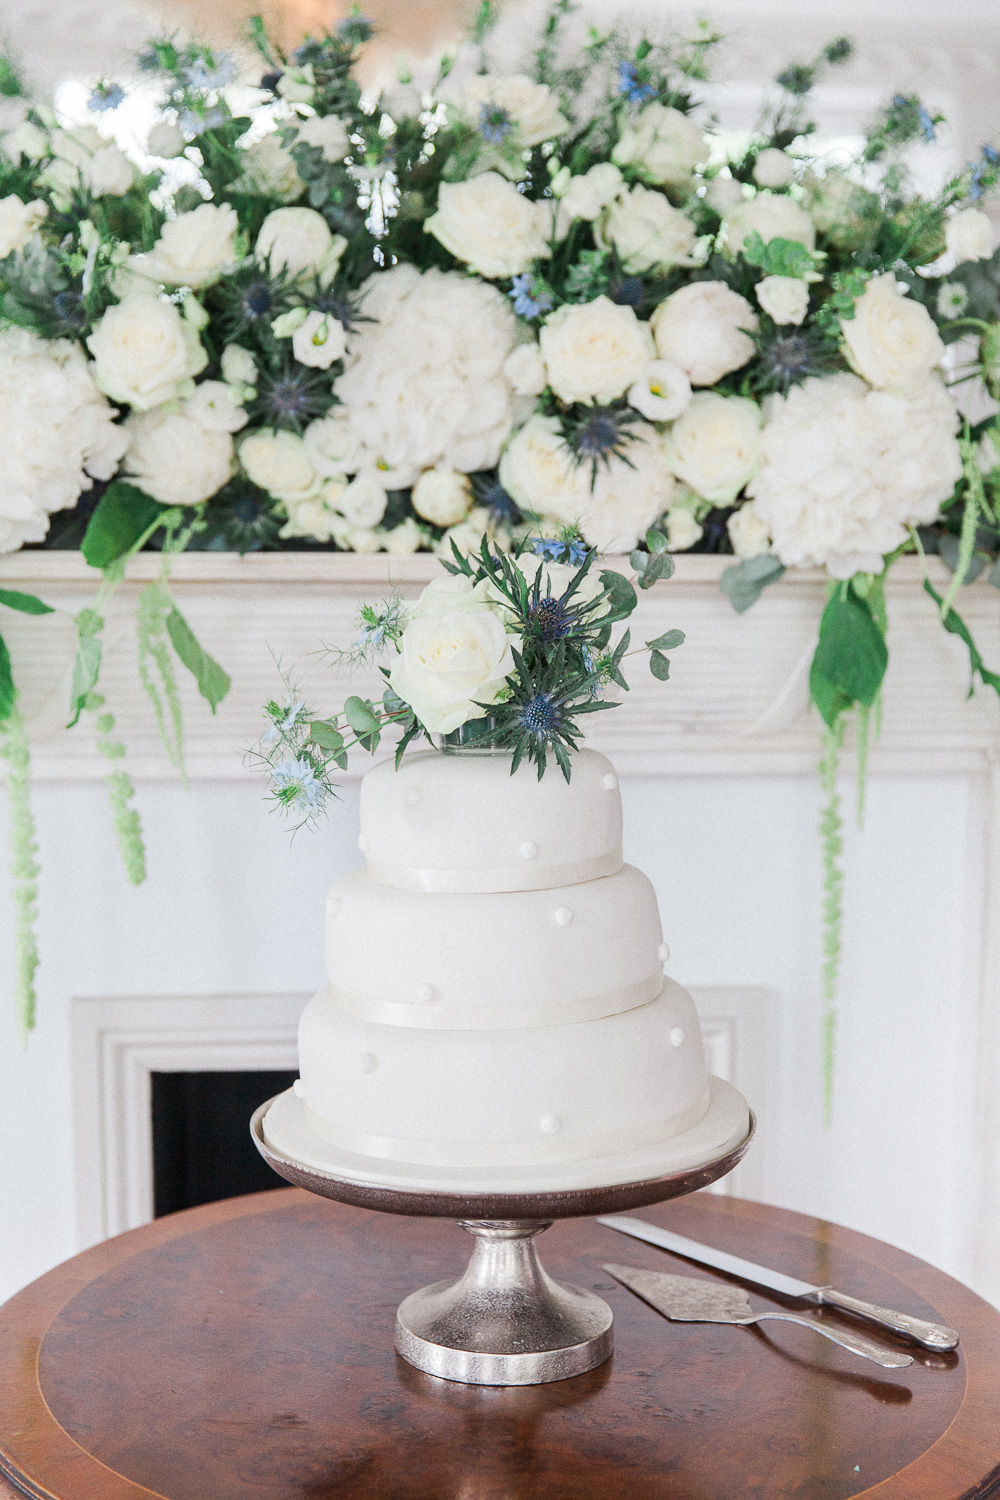 White wedding cake at Belair House wedding venue in London